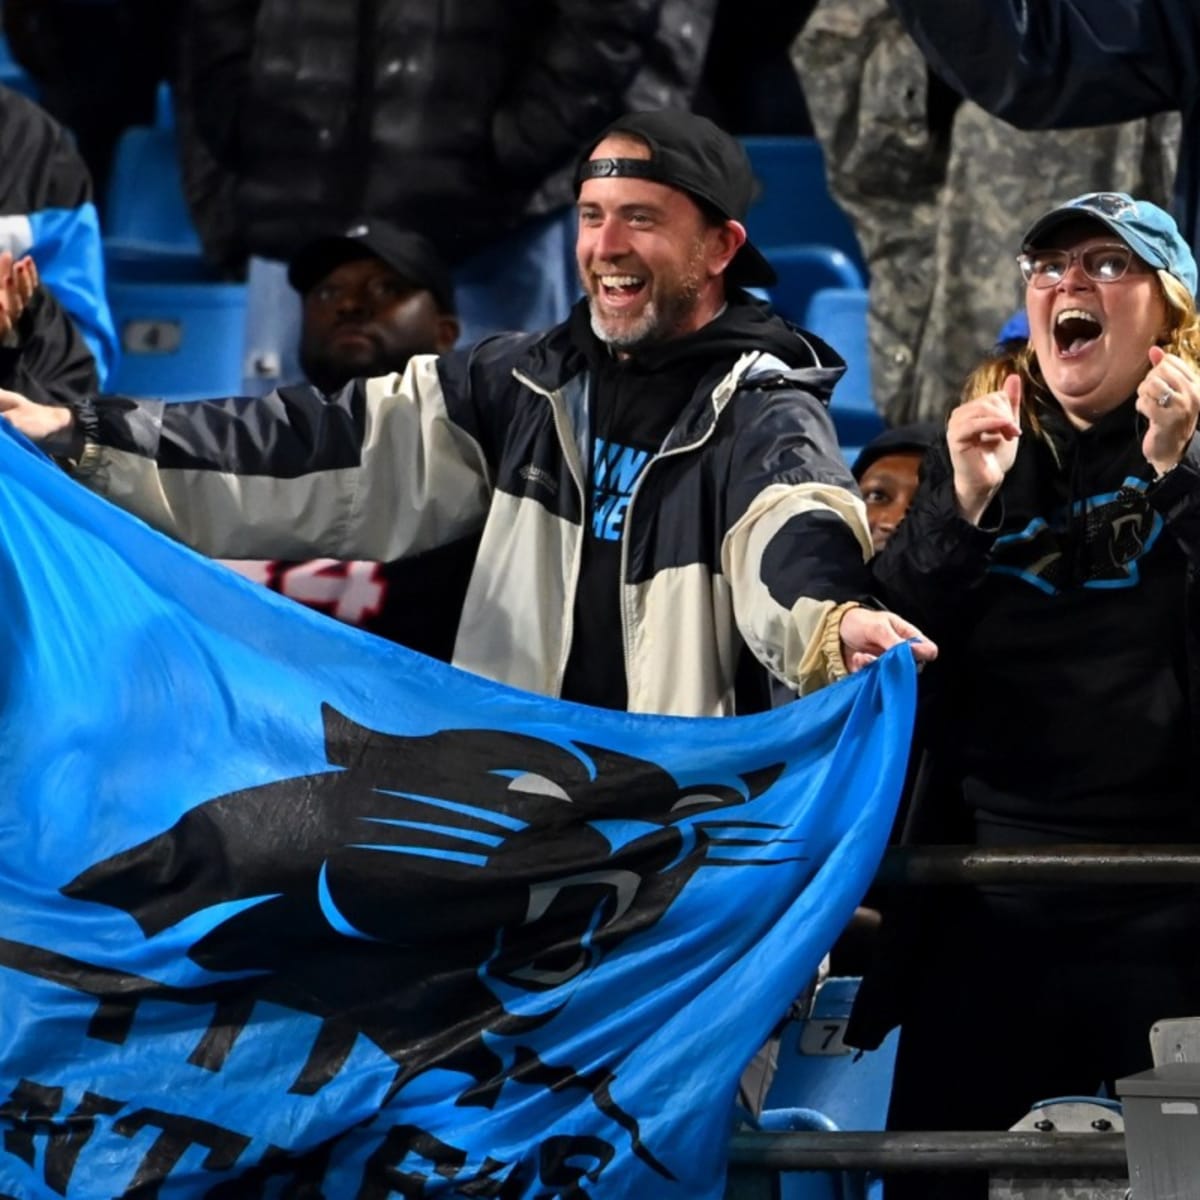 Panthers fan fest tickets on sale Wednesday 